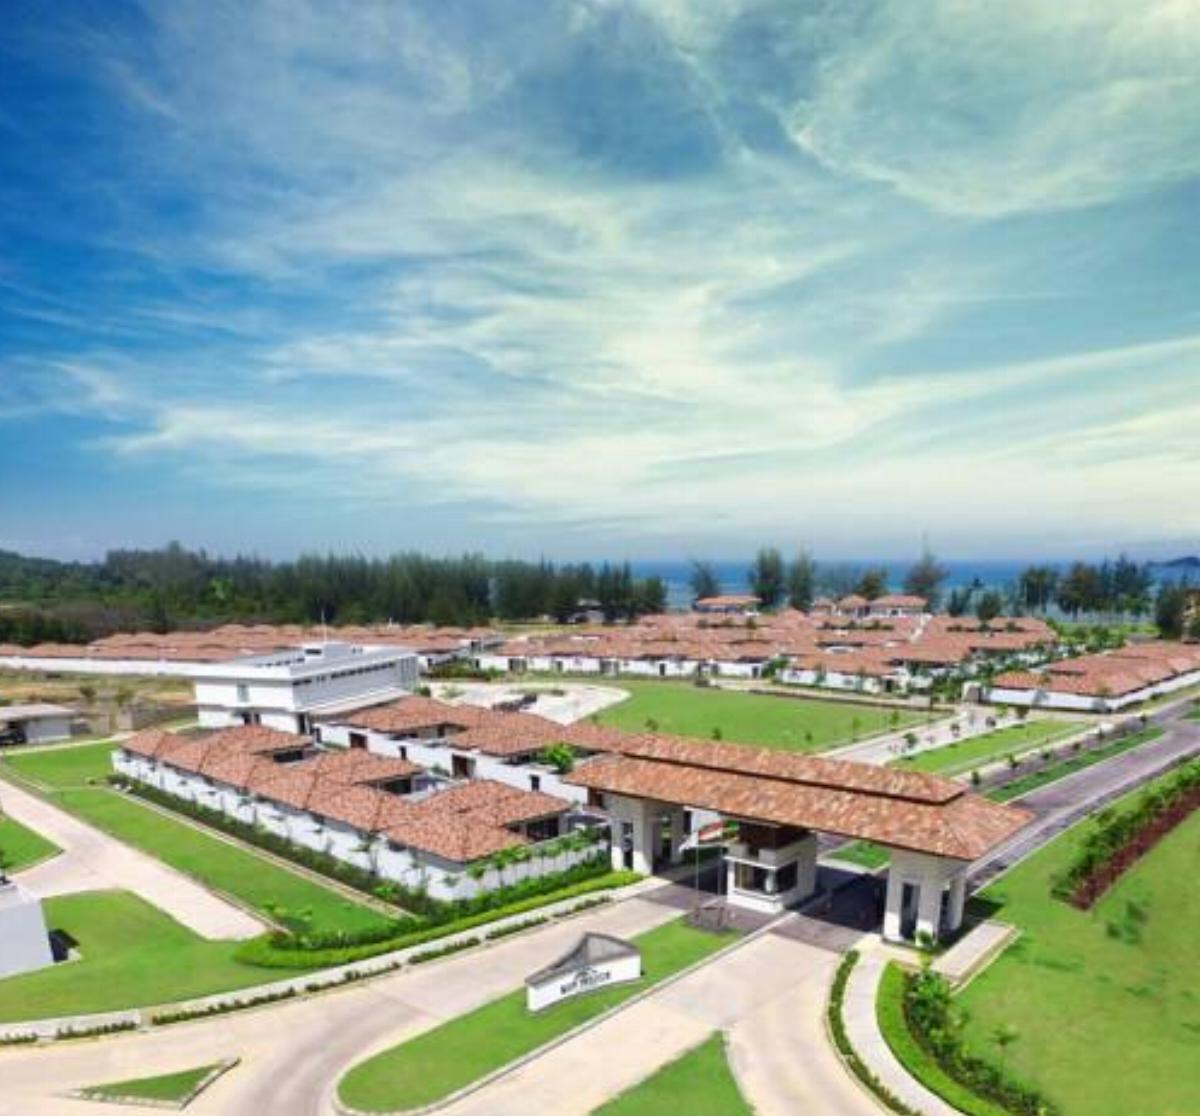 Holiday Villa Pantai Indah Bintan